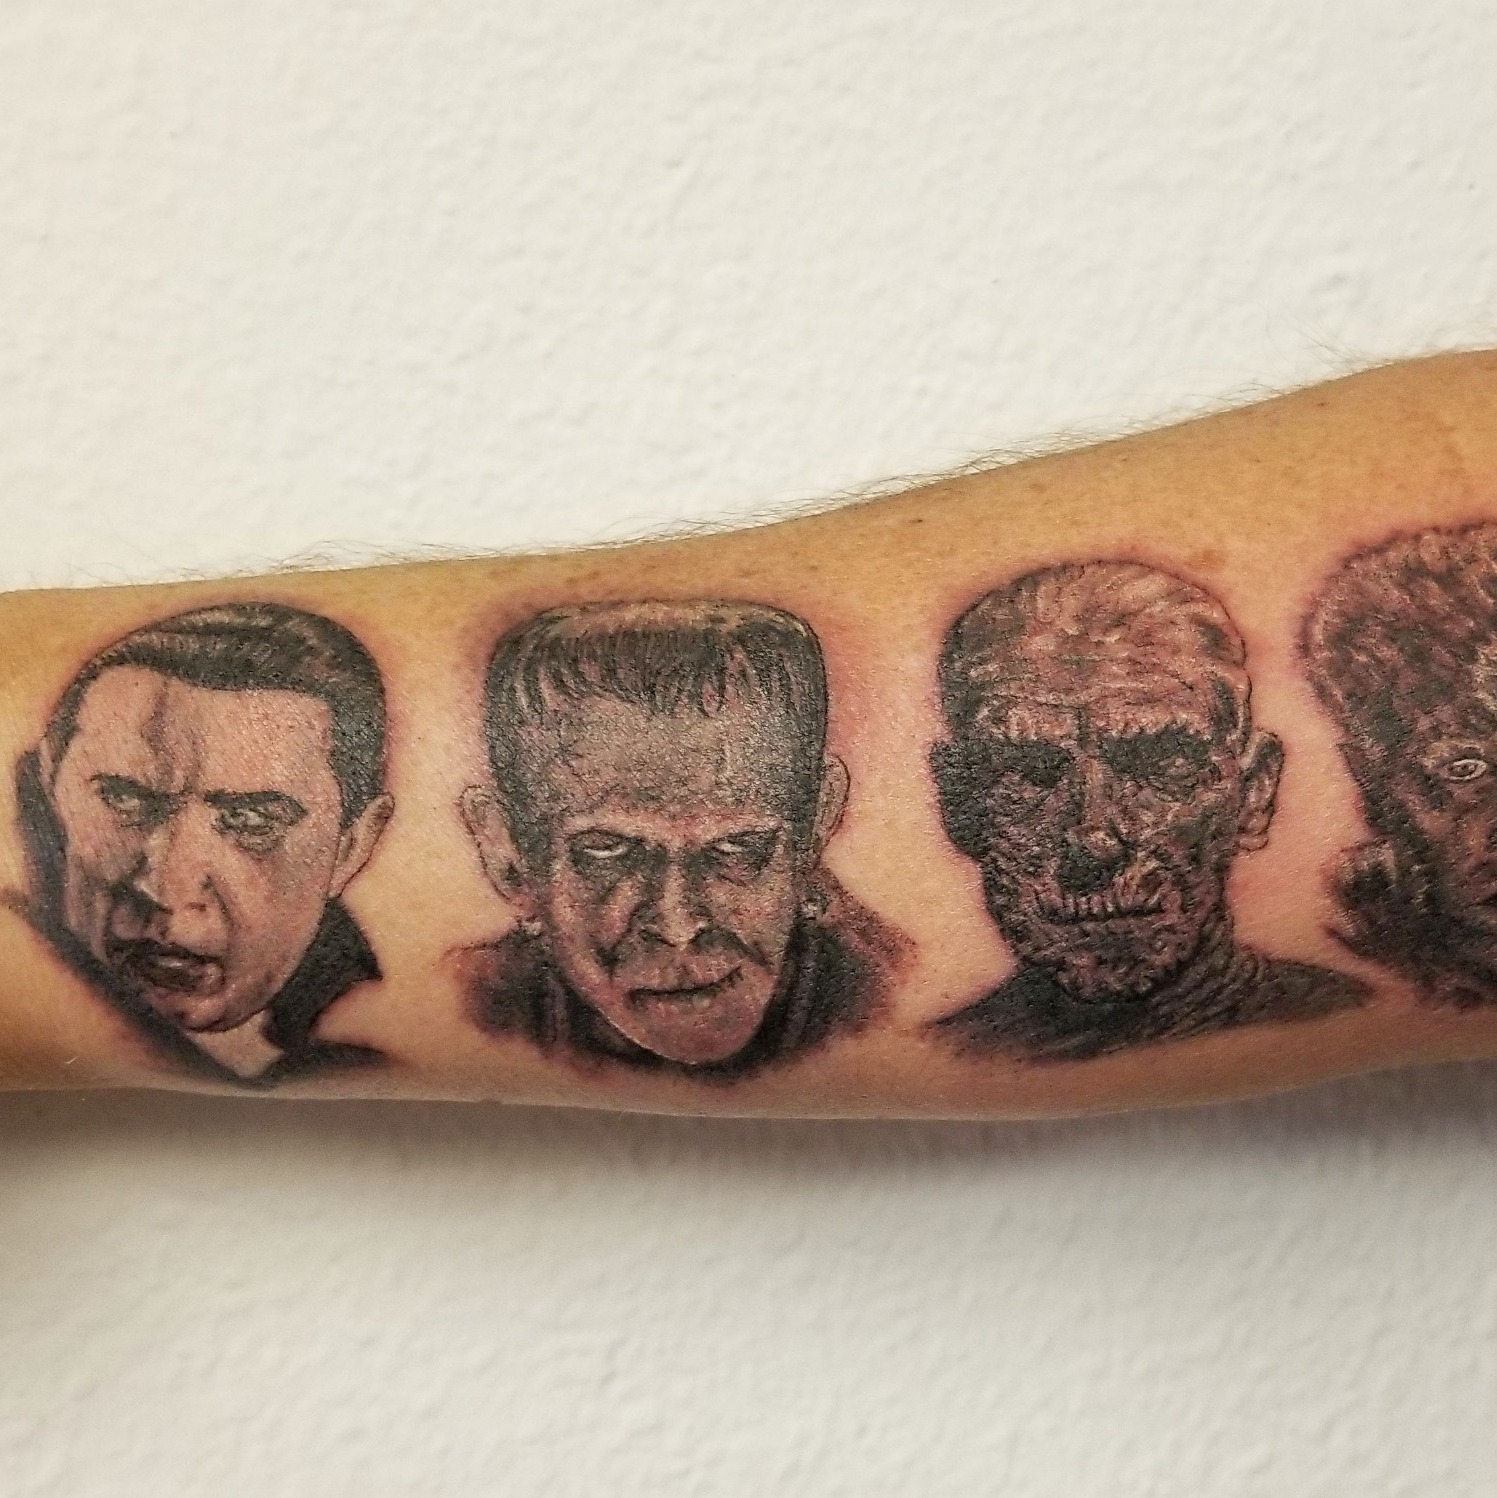 Universal monsters tattoo